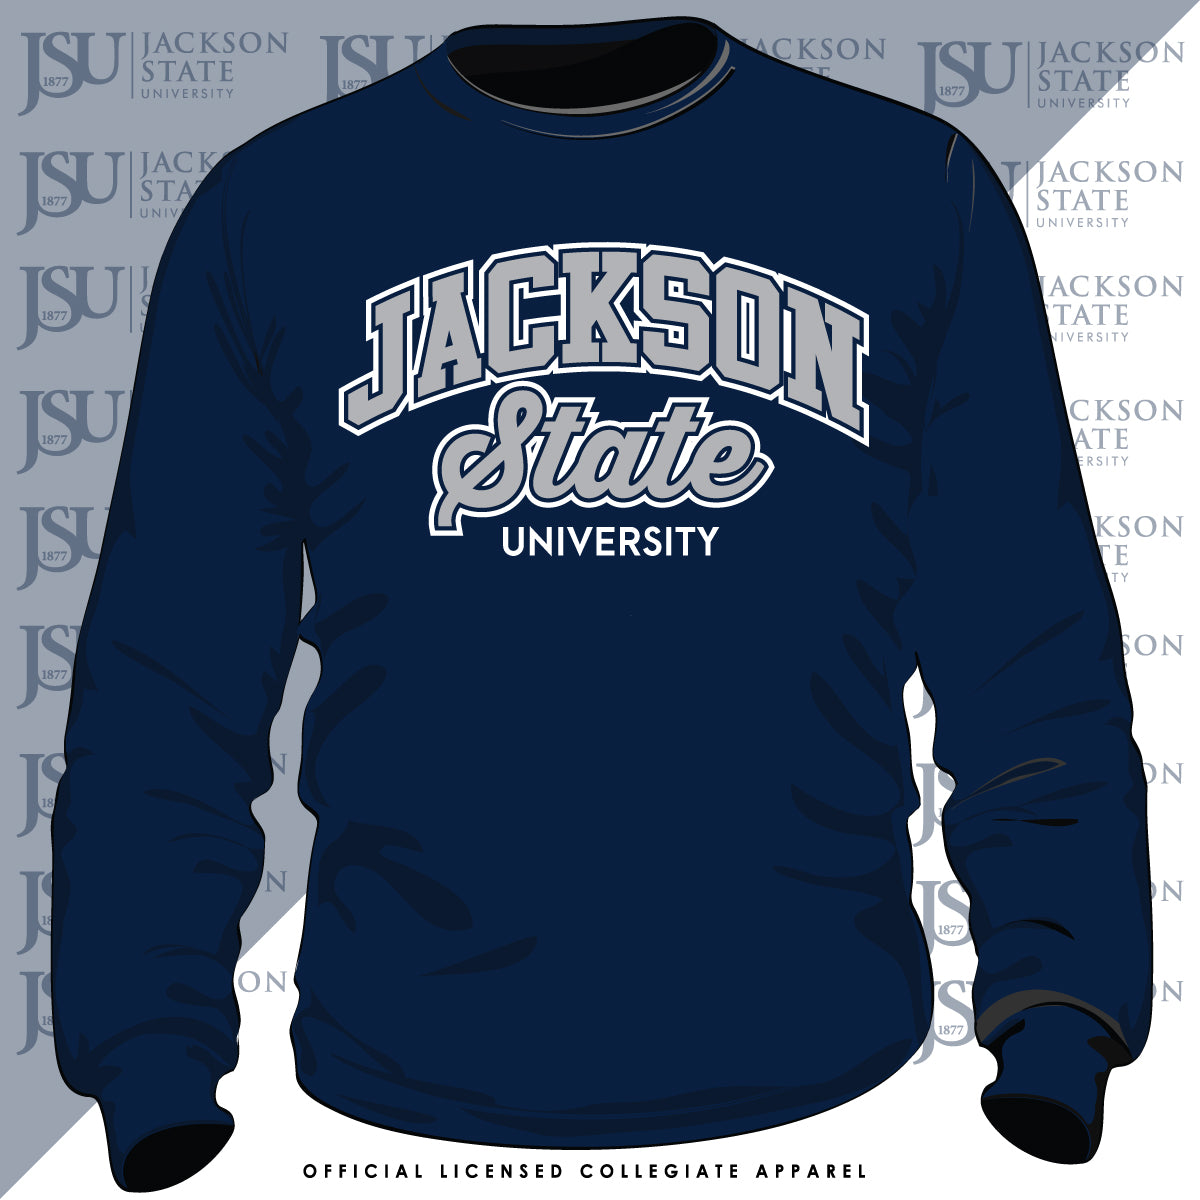 Jackson St. | Univ. ARCH Printed Navy Unisex Sweatshirt -Z-